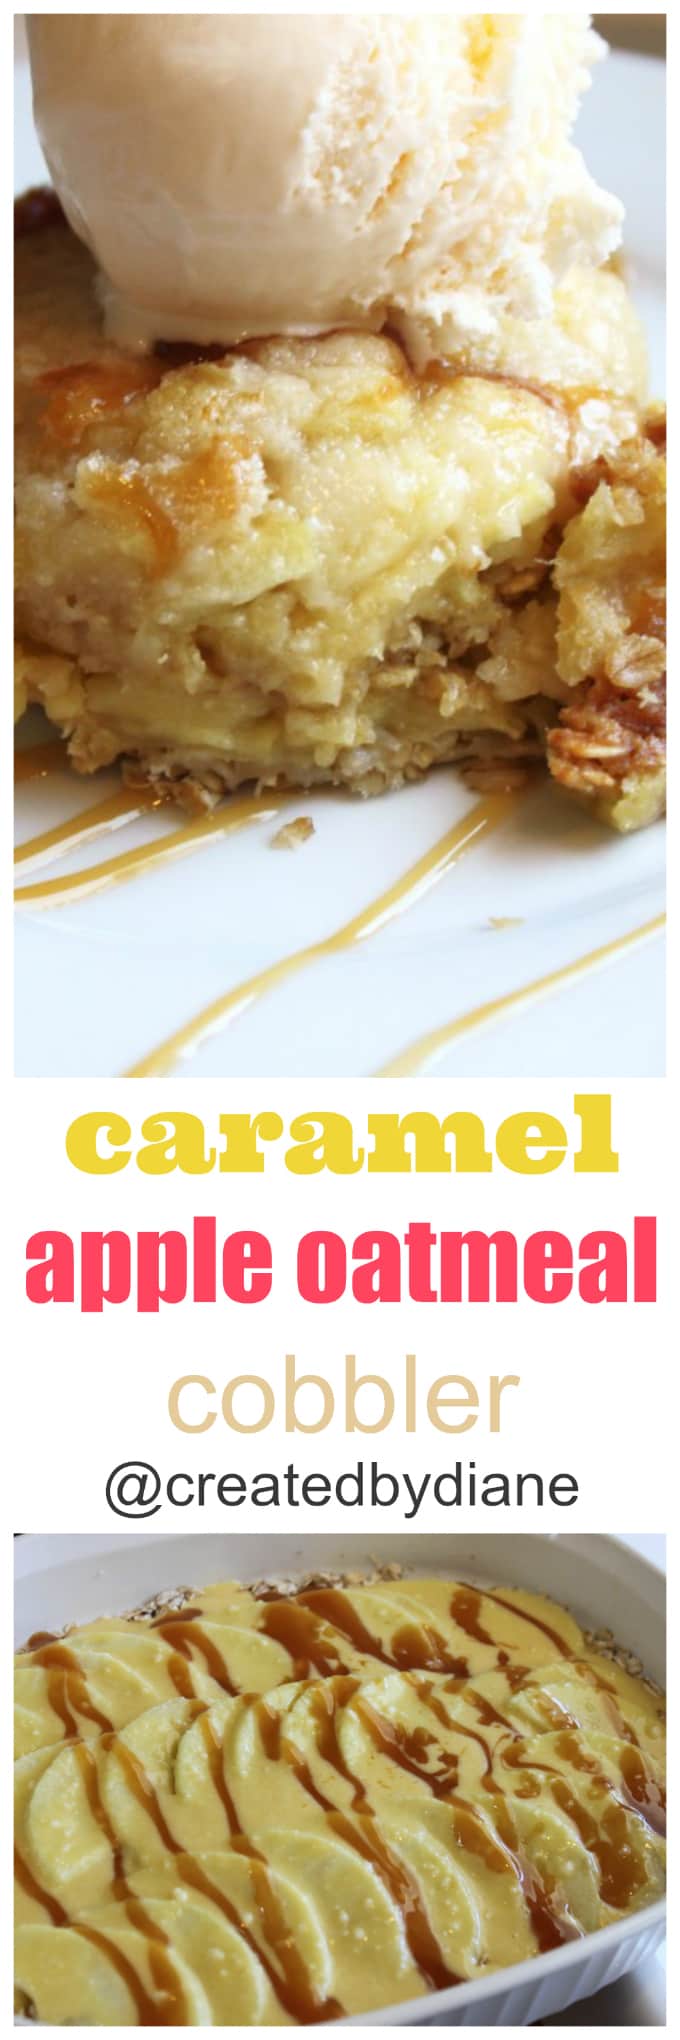 caramel apple oatmeal cobbler @createdbydiane